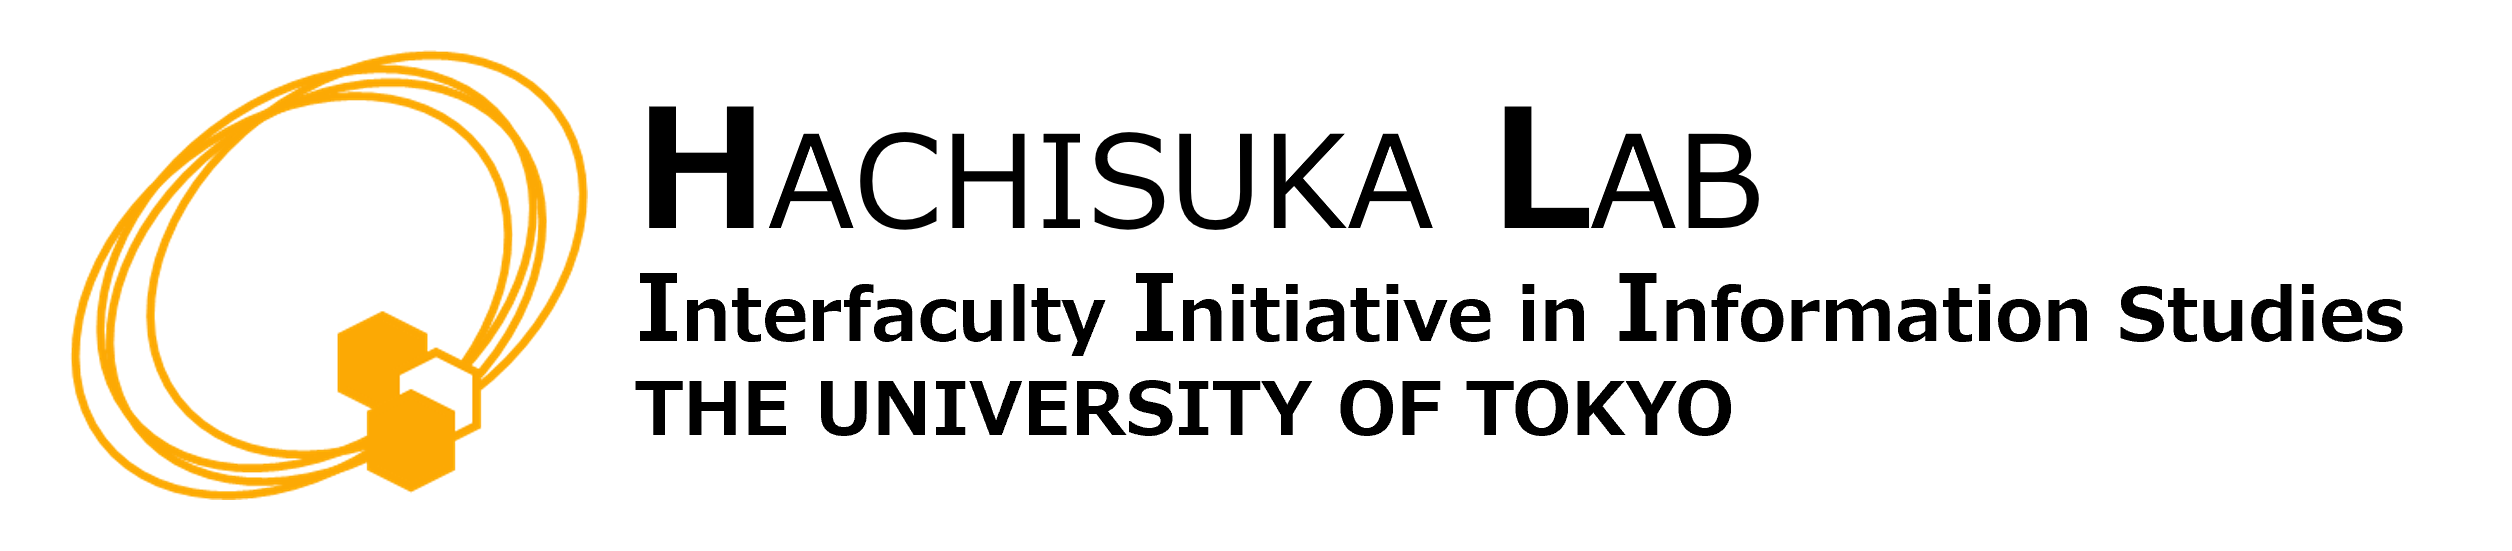 Hachisuka lab